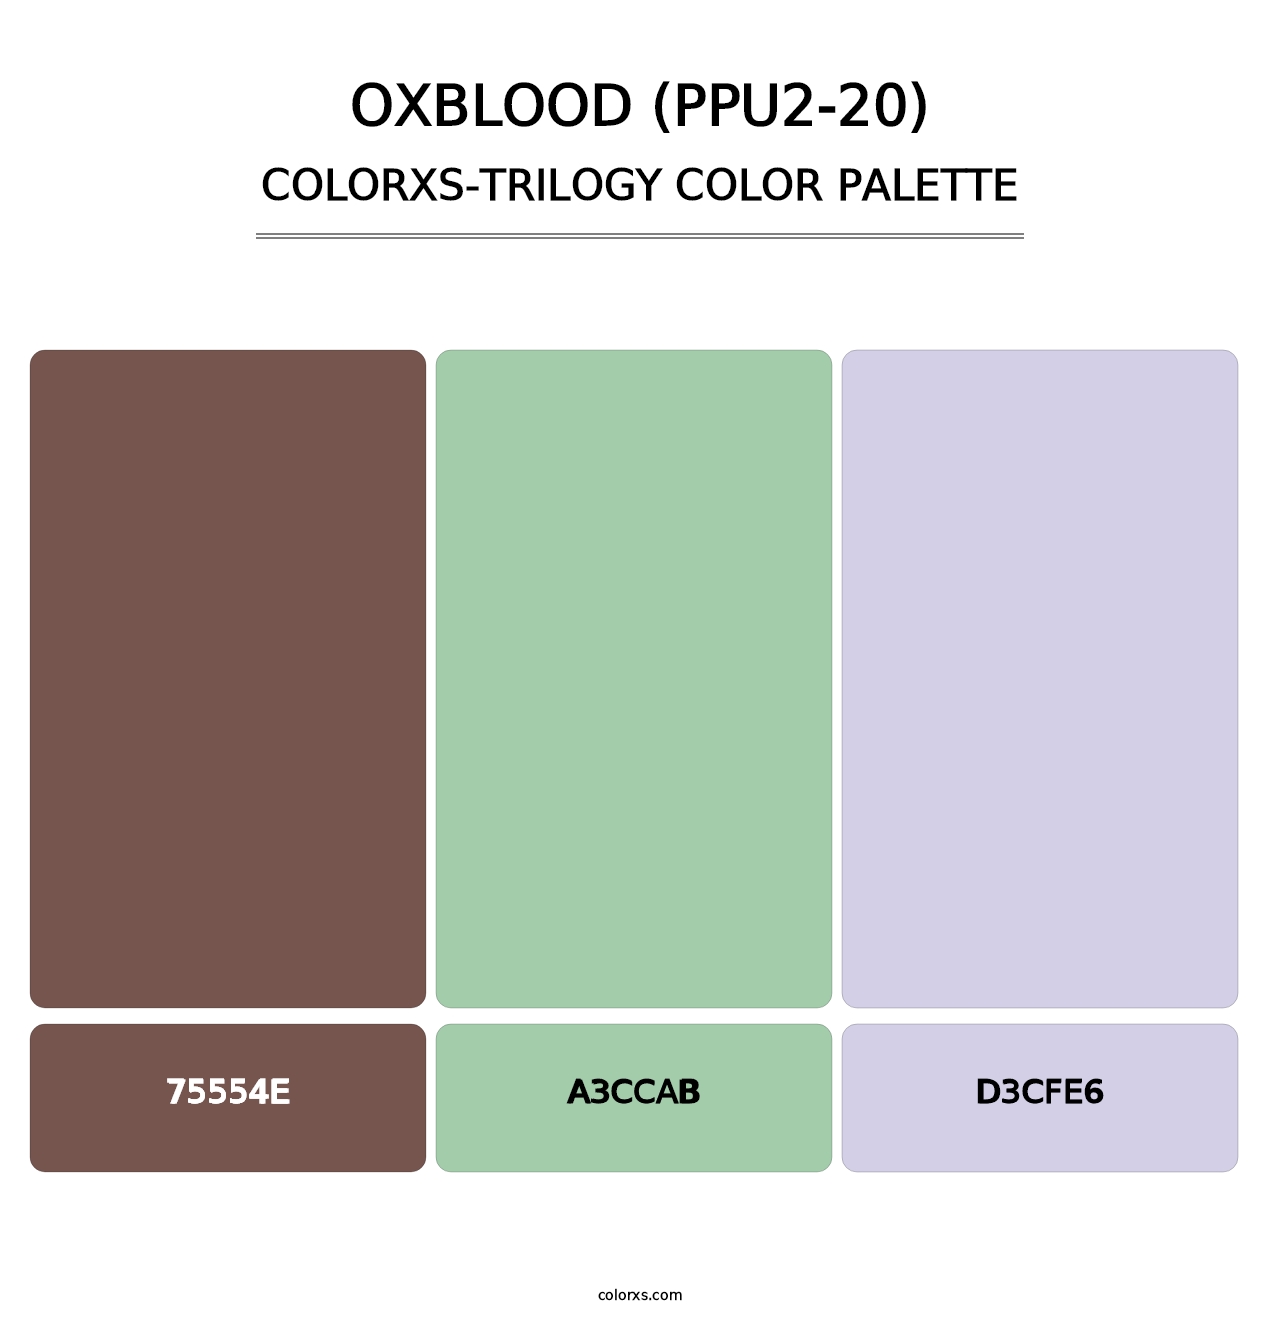 Oxblood (PPU2-20) - Colorxs Trilogy Palette